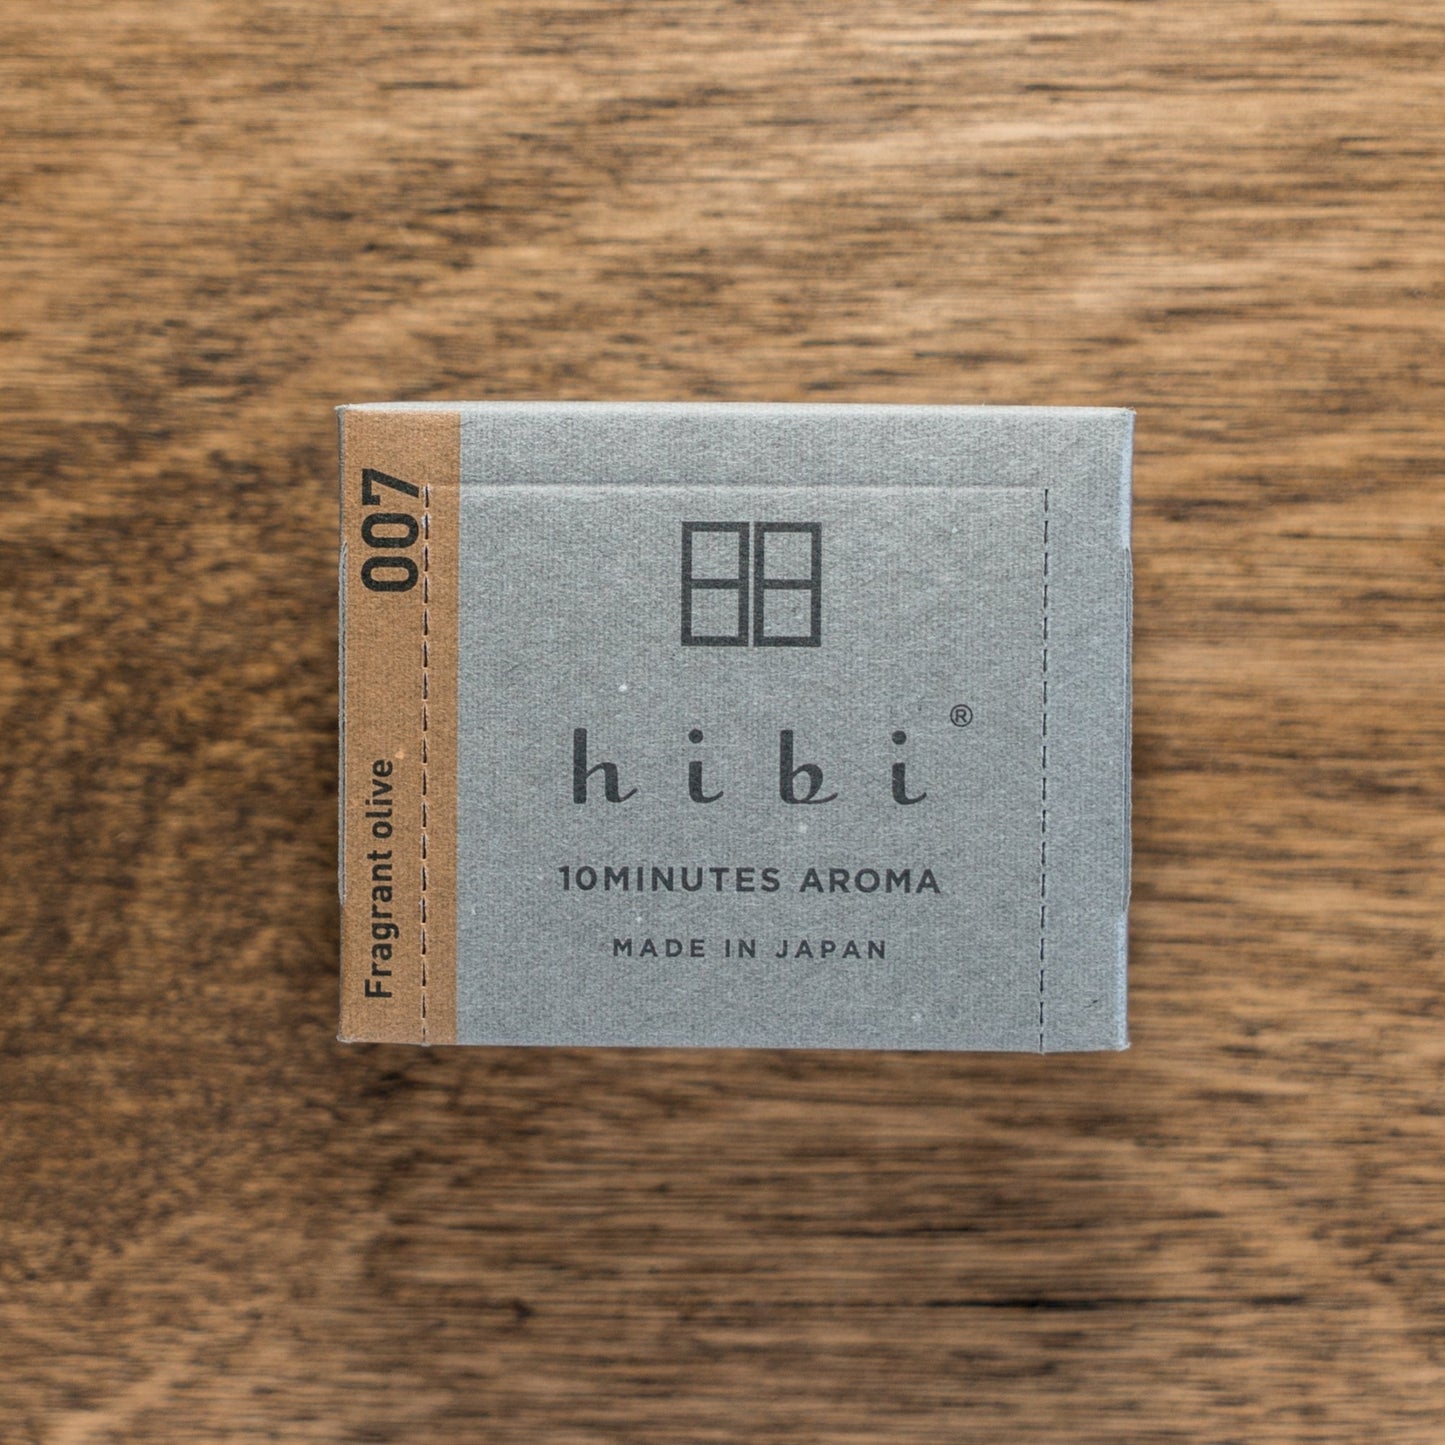 hibi incense available at ukigoods